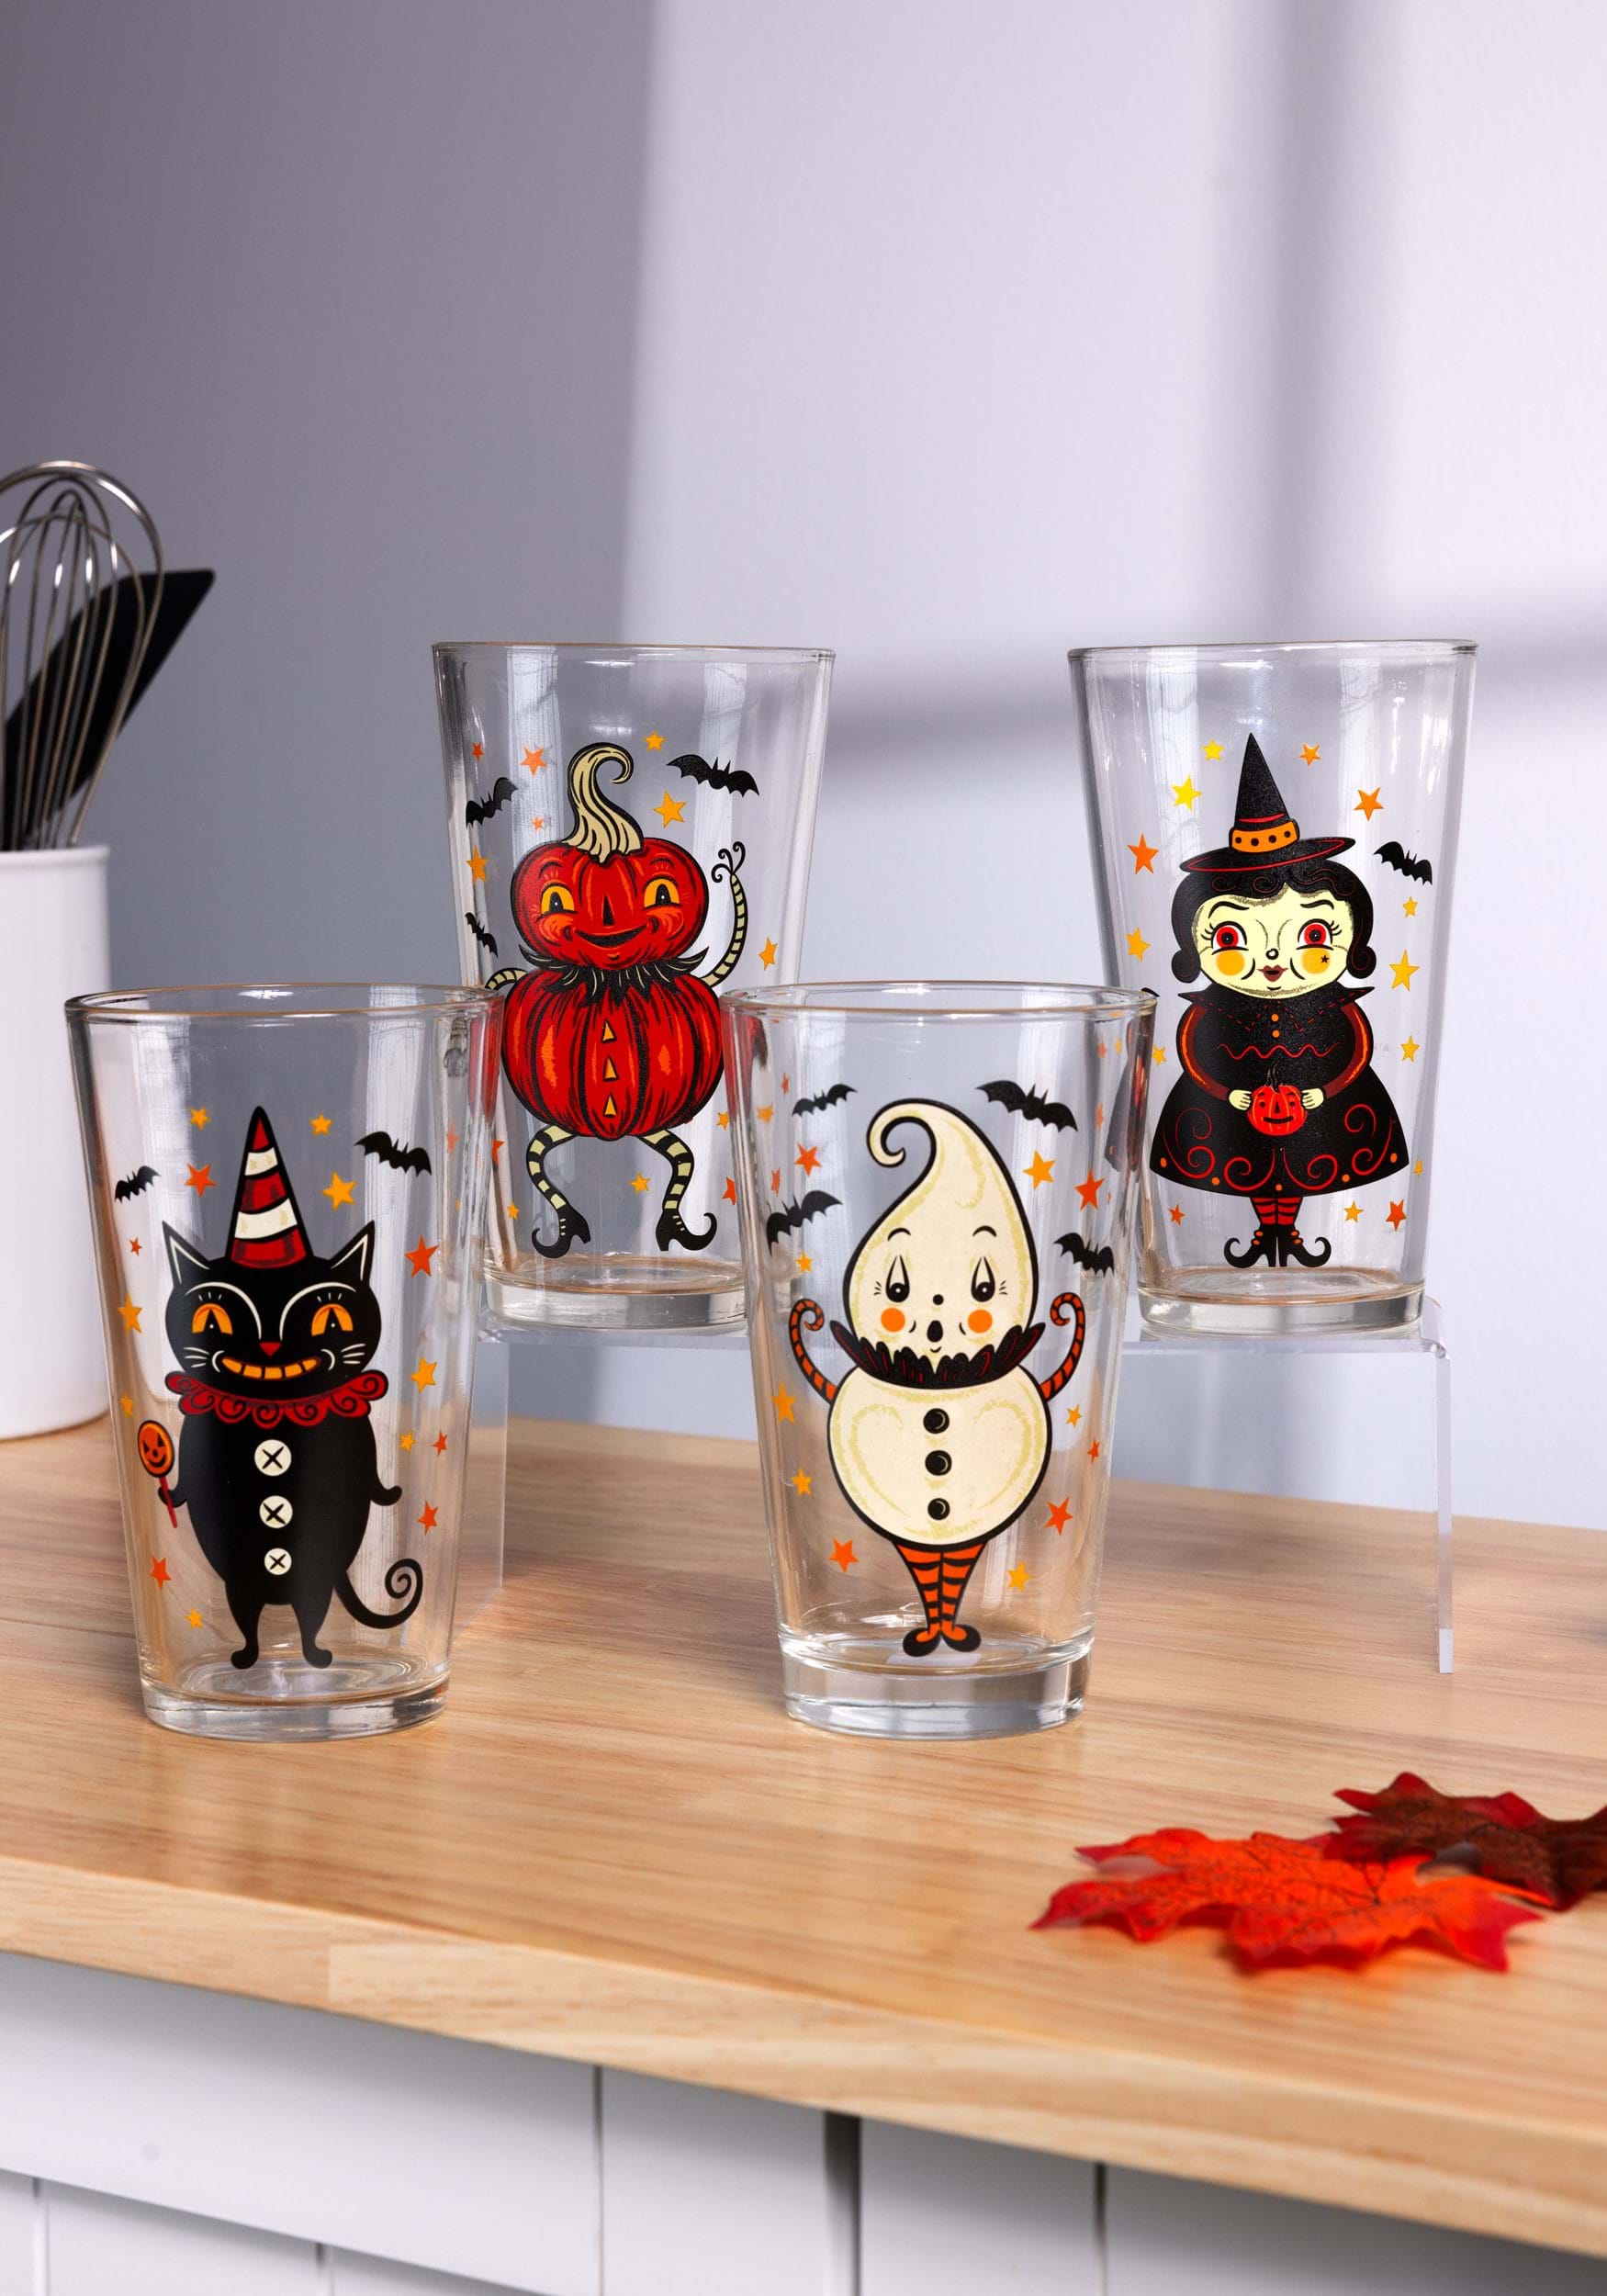 https://images.halloweencostumes.com/products/61912/1-1/glass-vintage-halloween-16oz-tumblers-set-of-4.jpg